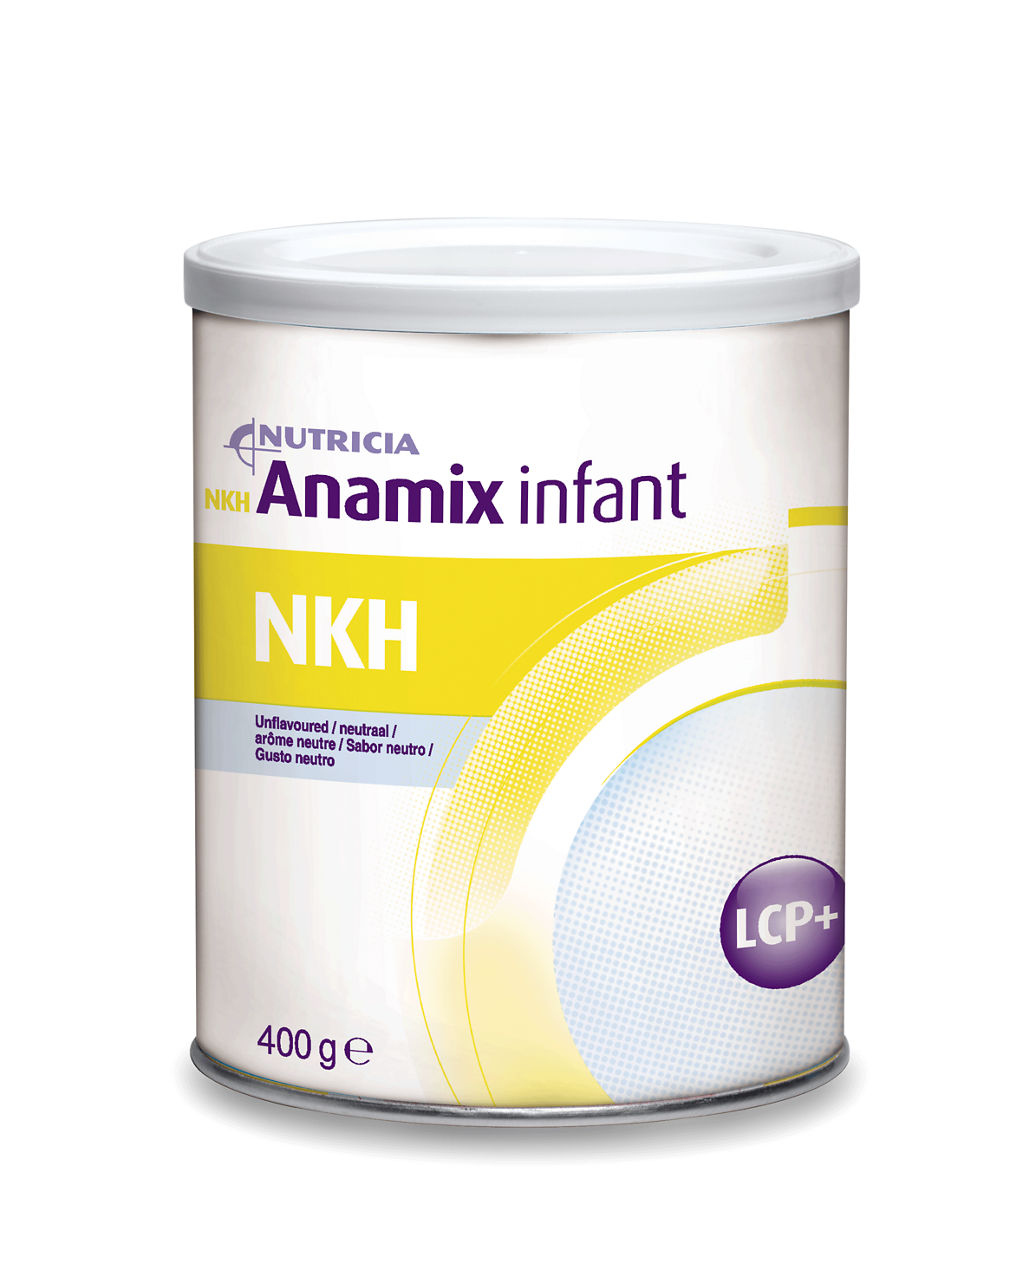 en-GB,NKH Anamix Infant